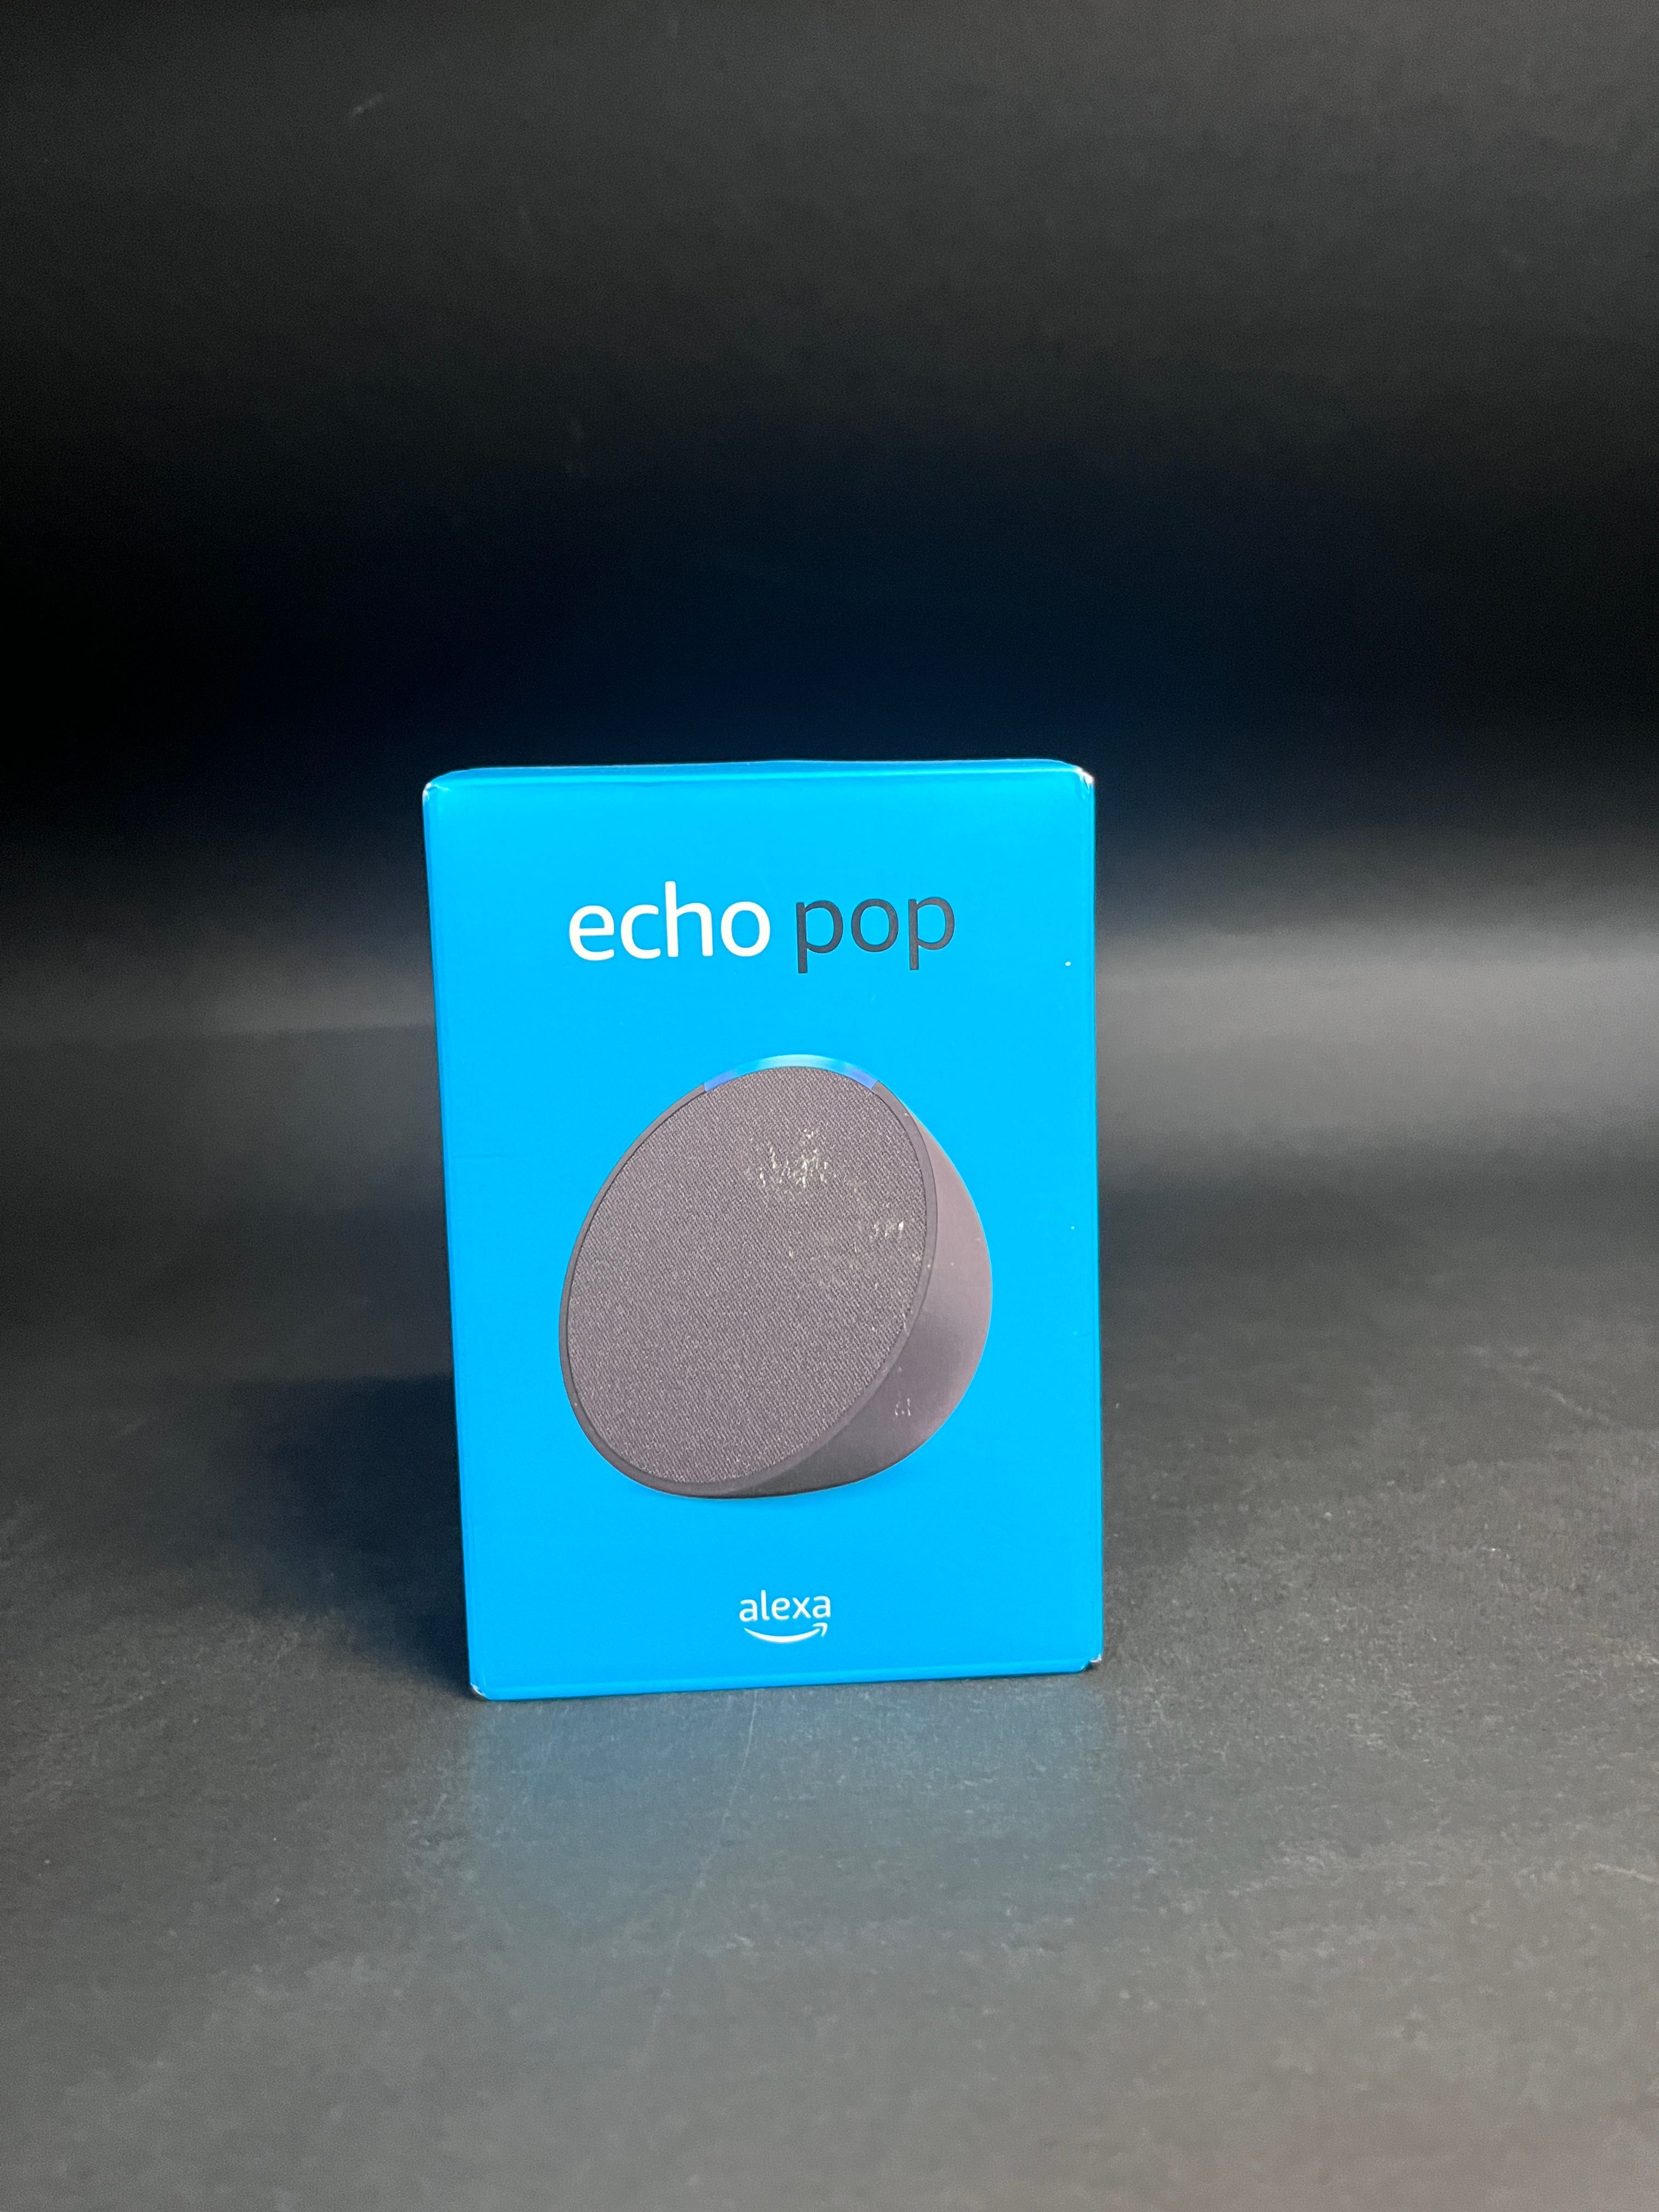 Boxa inteligenta Echo Pop